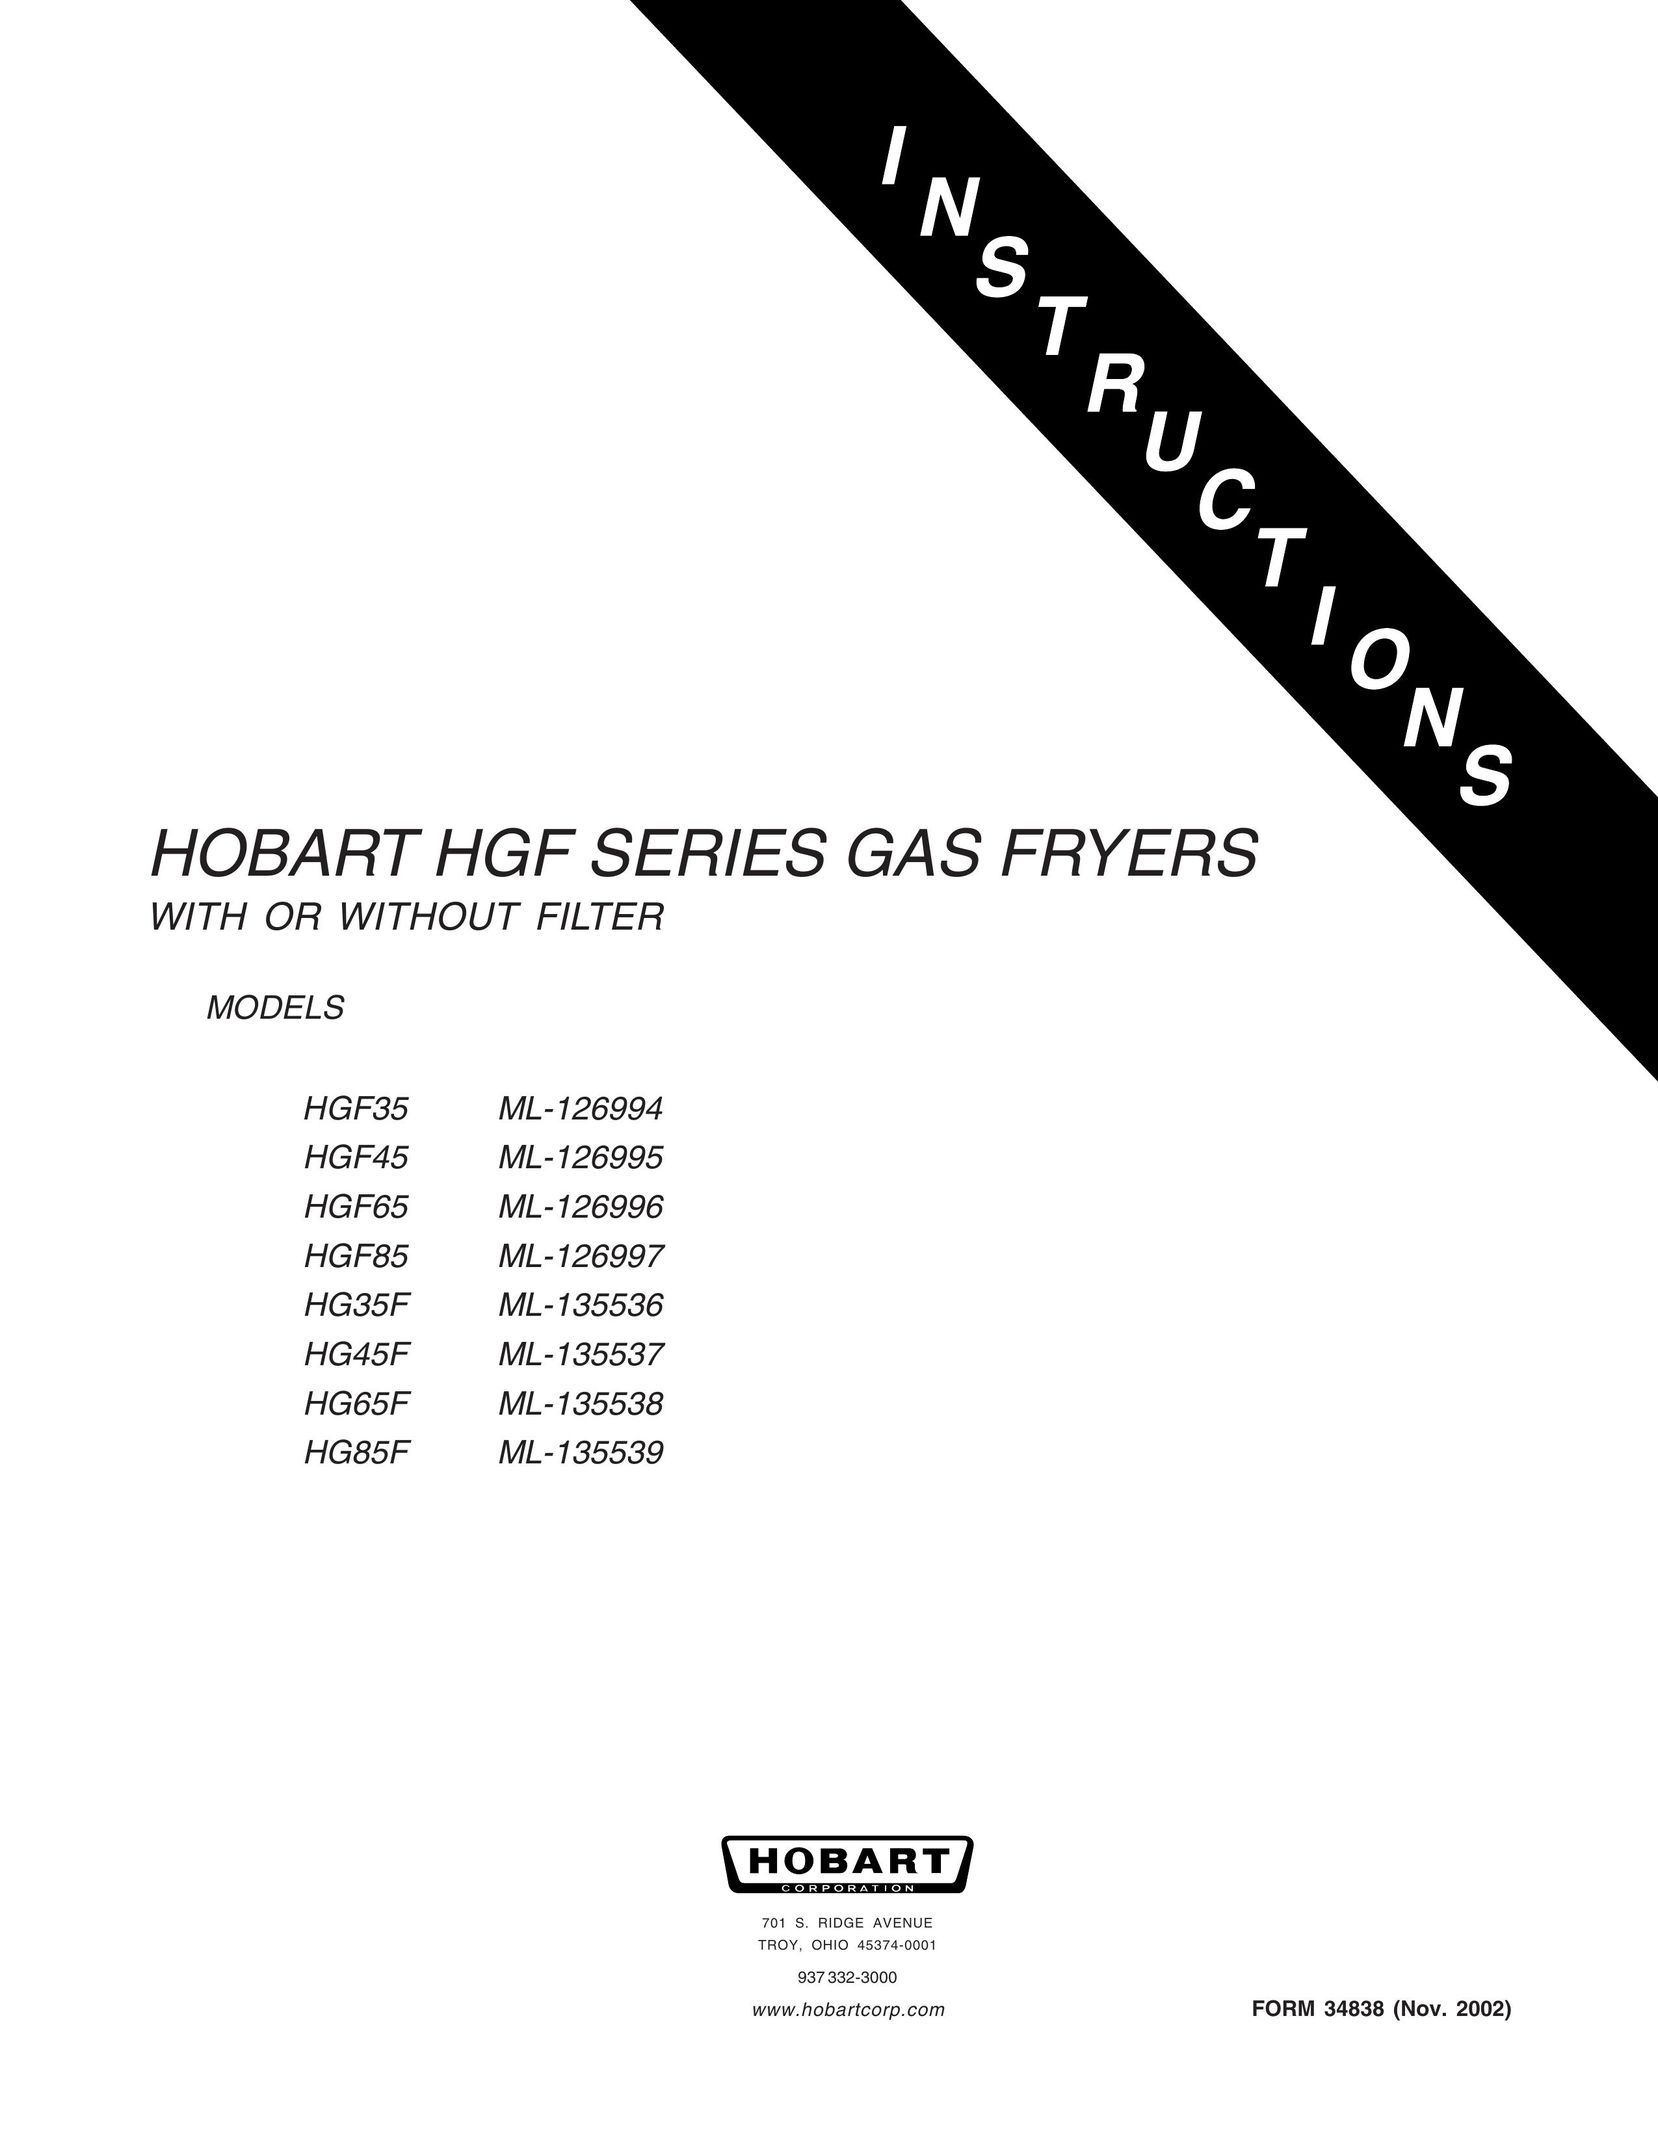 Hobart HG45F ML-135537 Fryer User Manual